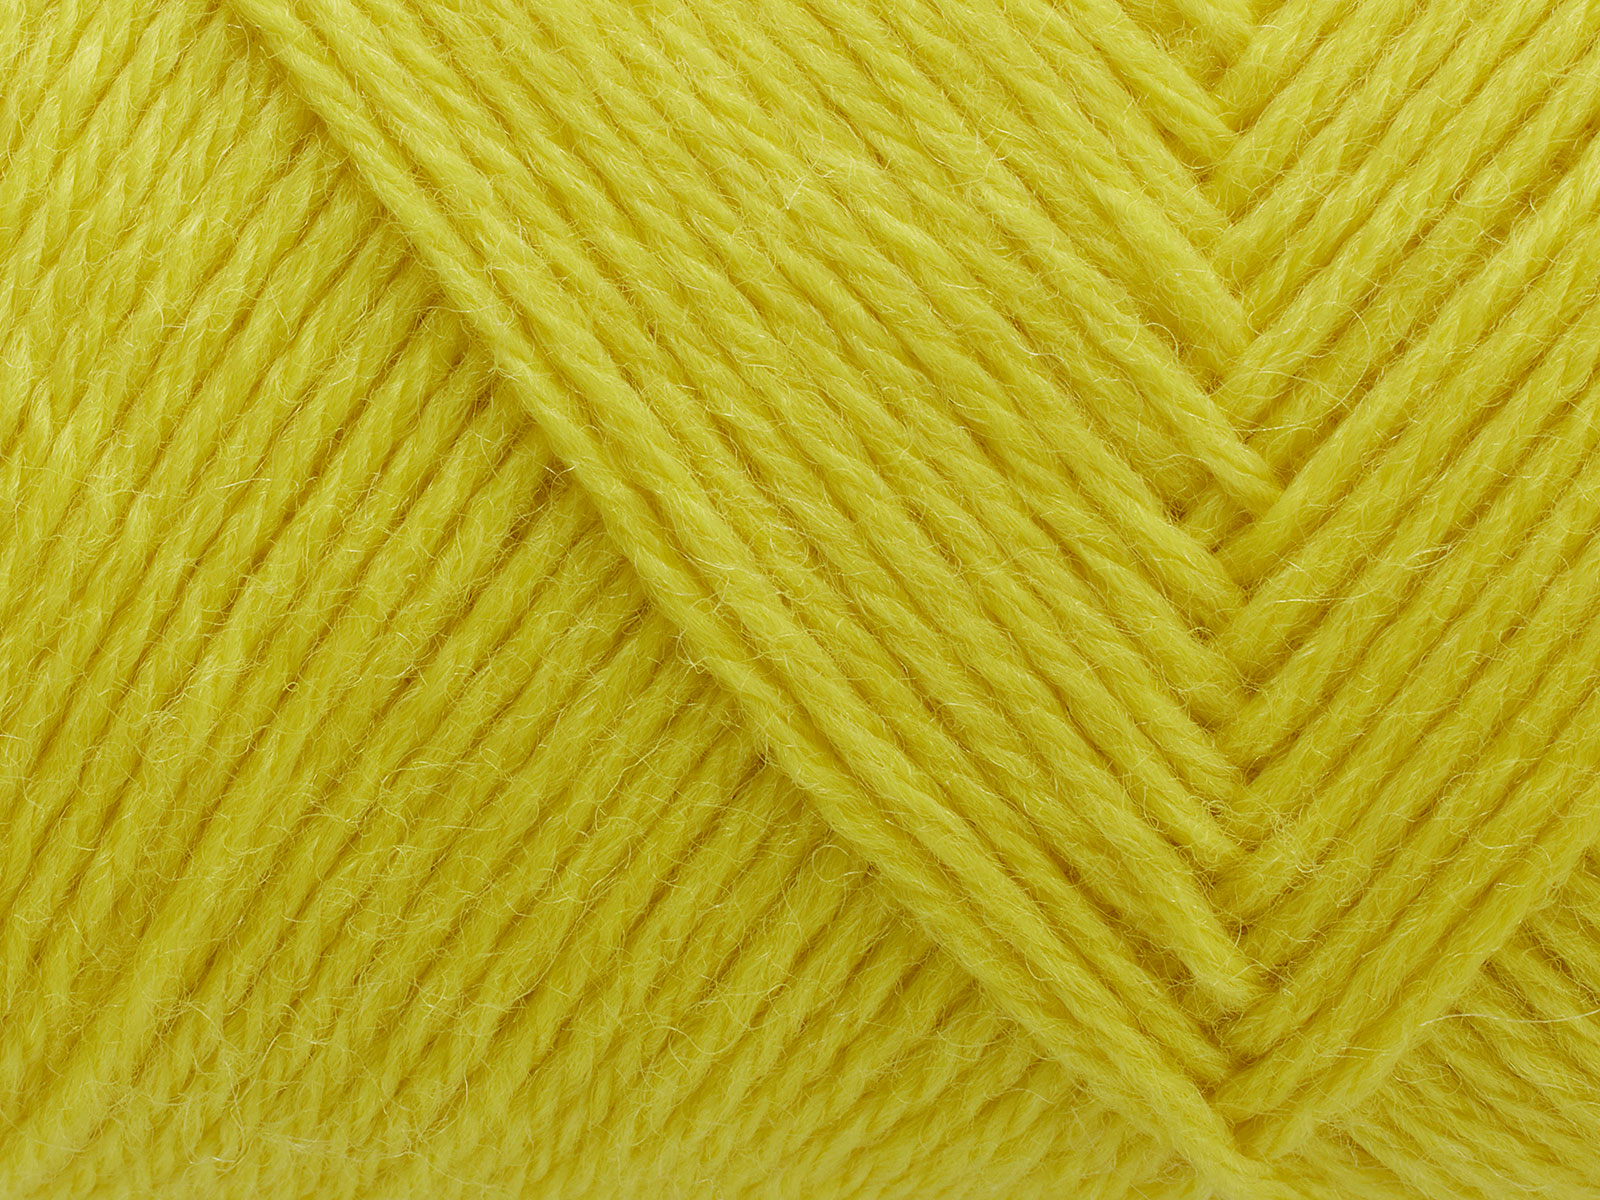 Arwetta - Electric Yellow (251)